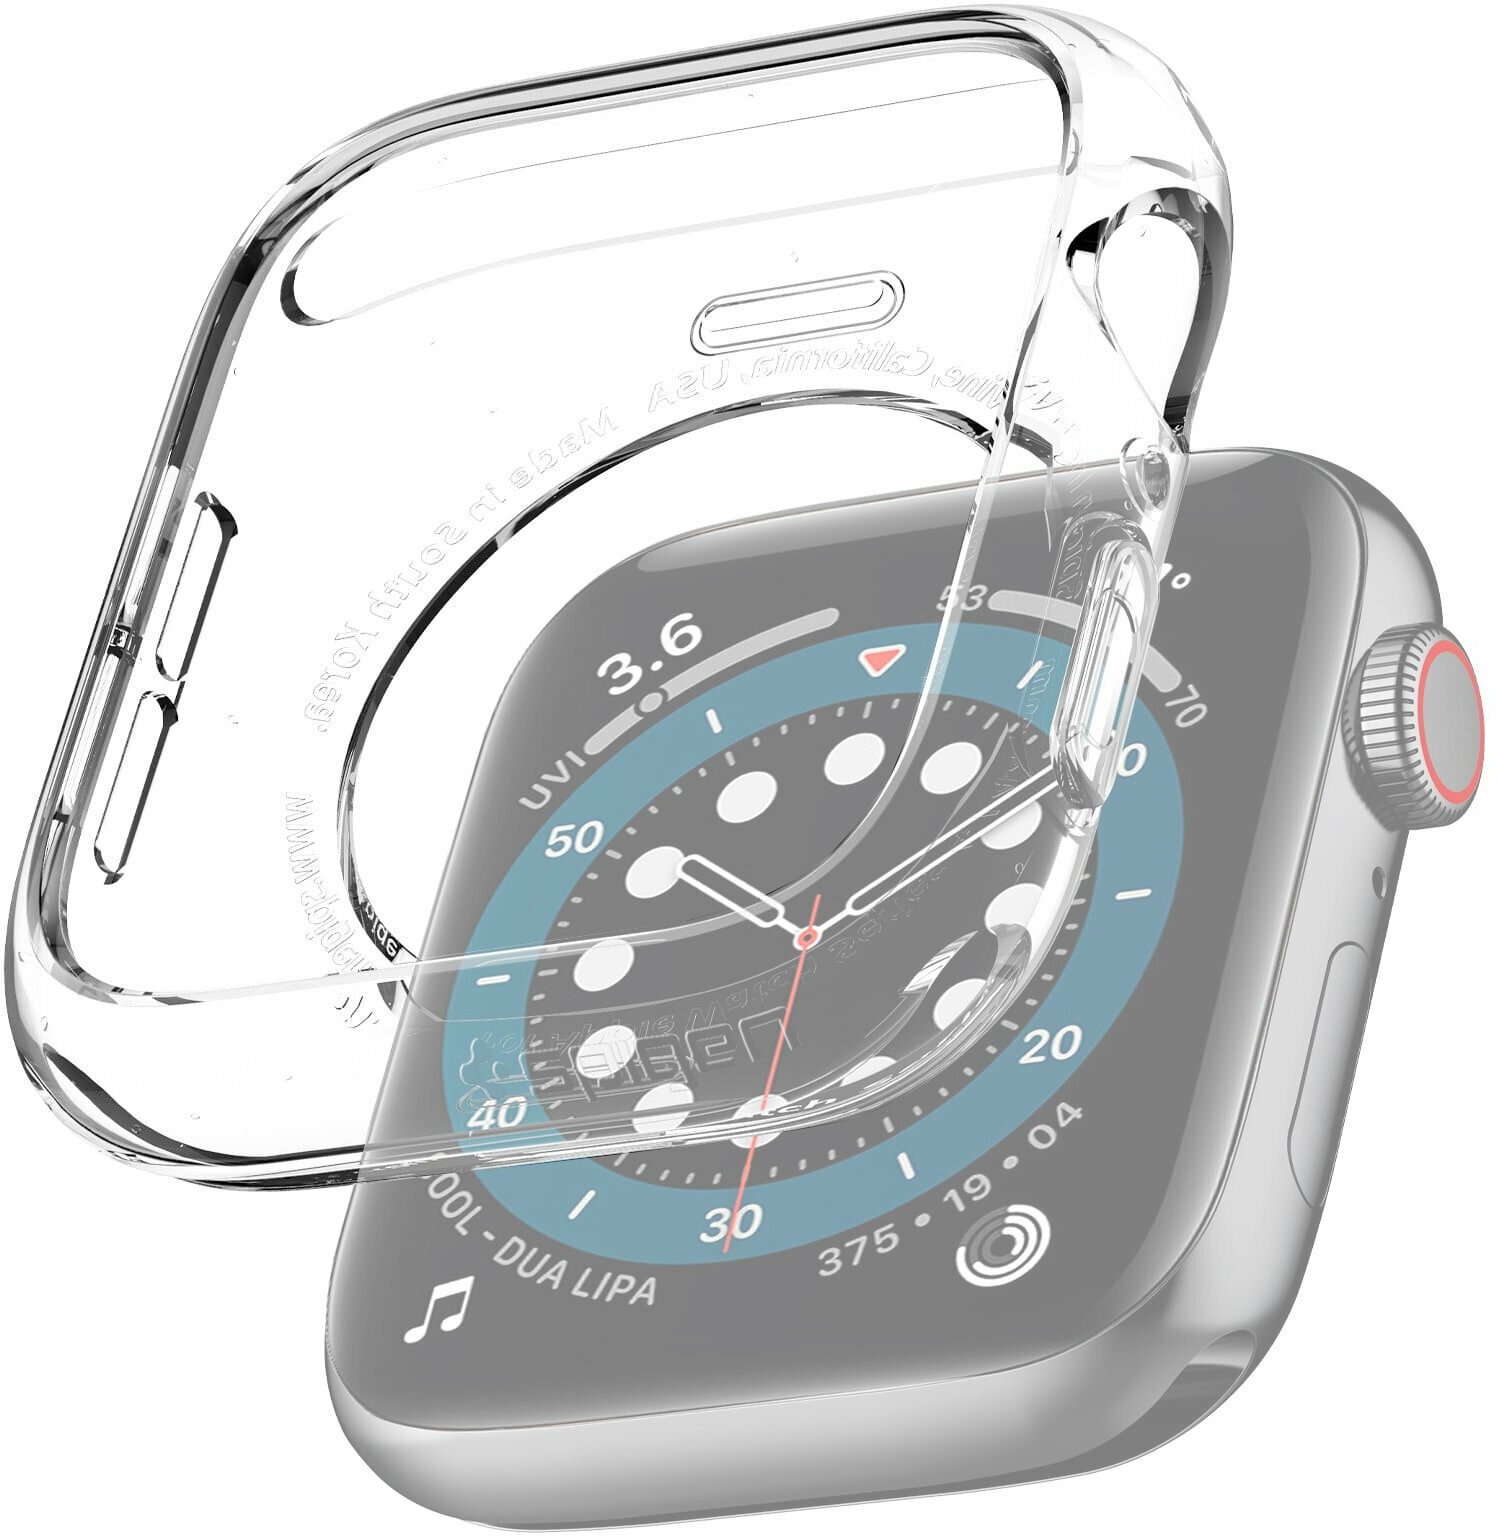 Smartwatch accessories Spigen Liquid Crystal